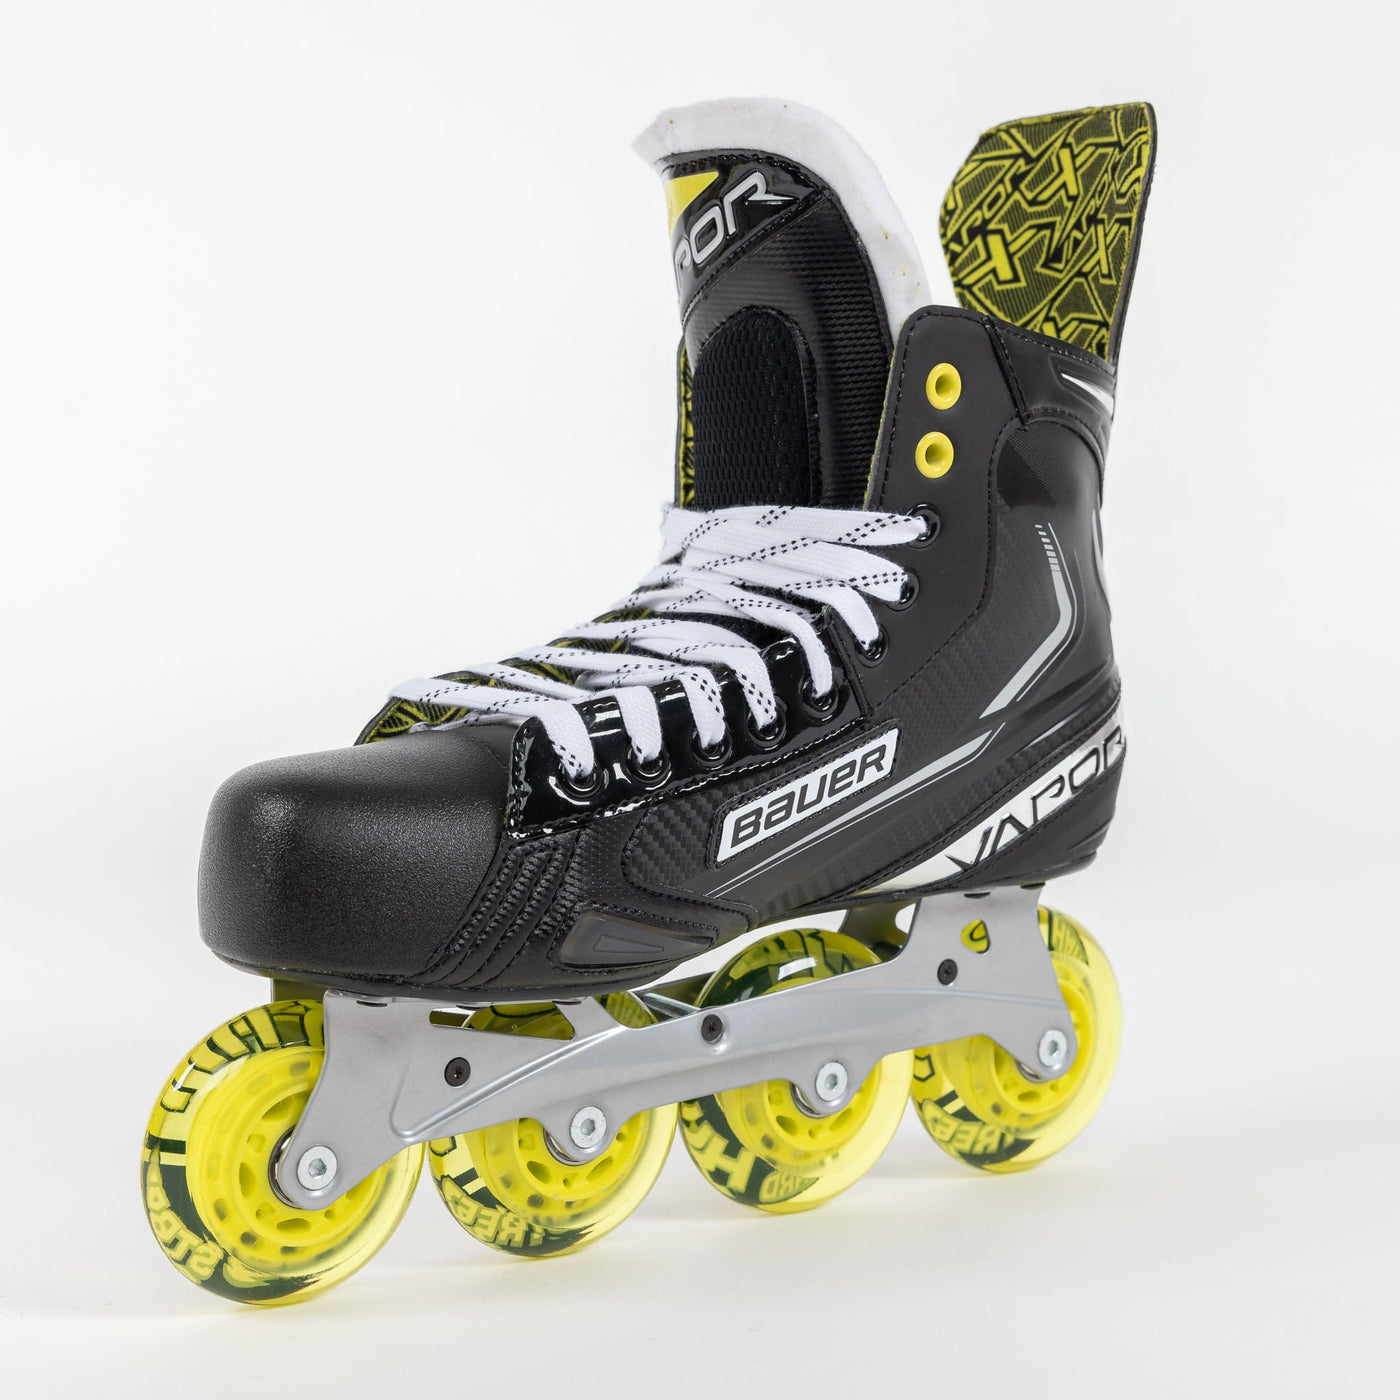 Bauer Vapor X3.5 Junior Roller Hockey Skates - The Hockey Shop Source For Sports